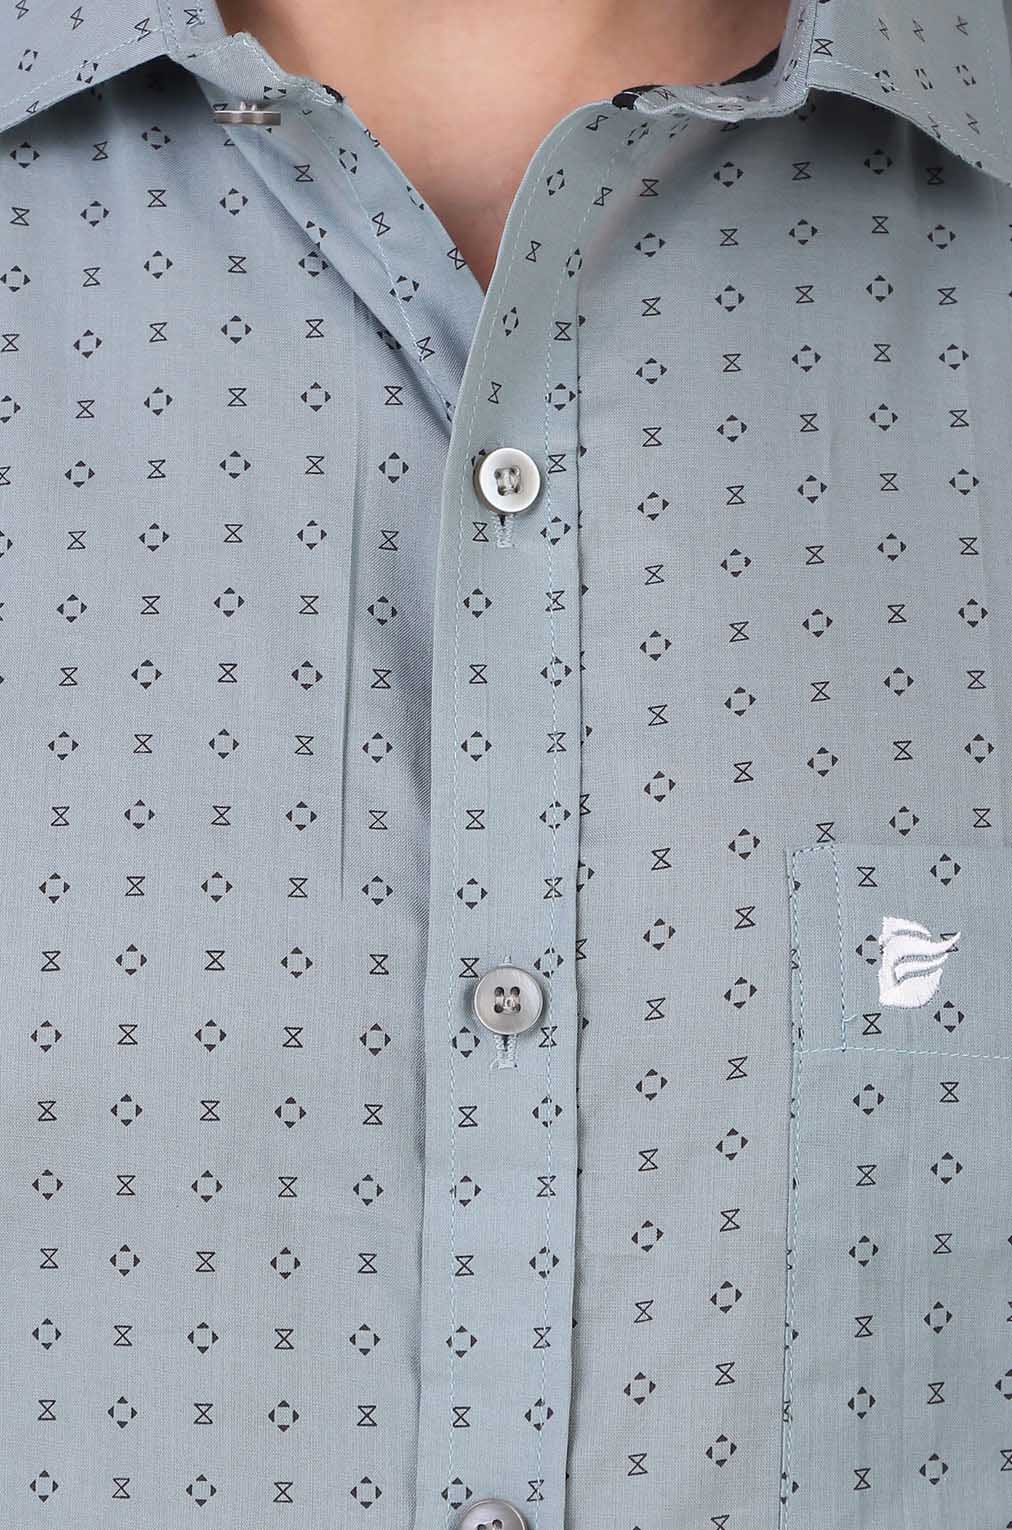 Men Steel Grey Printed Slim Fit Formal Shirt